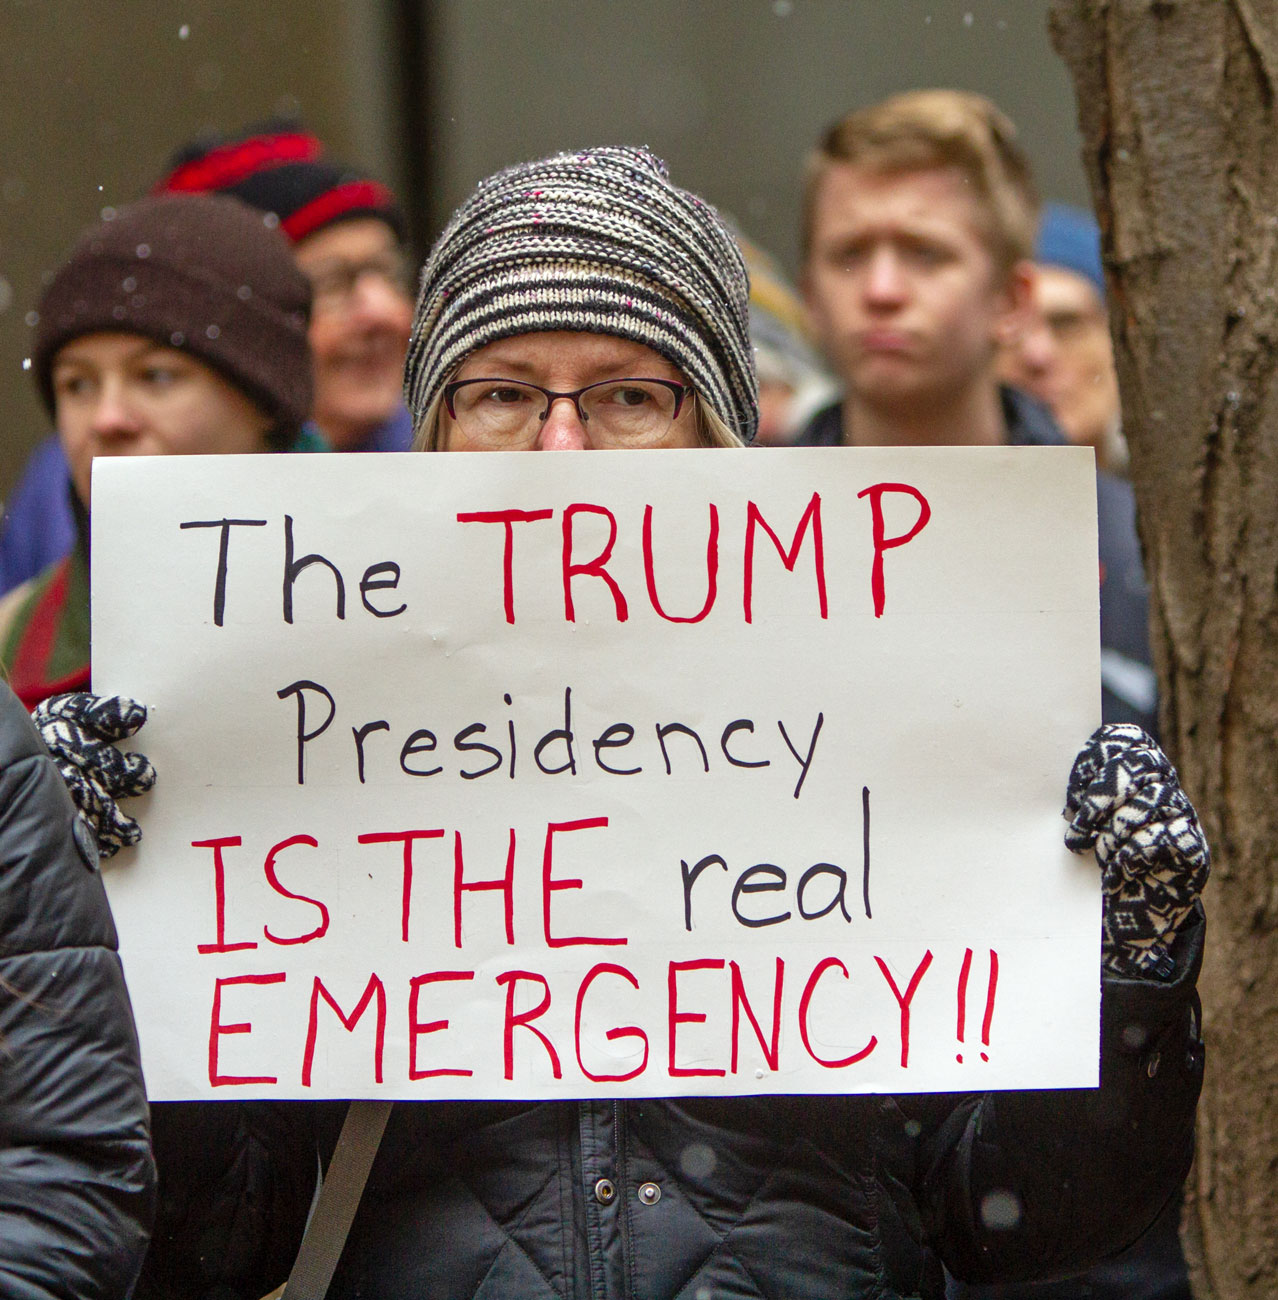 The Trump presidency is the real emergency!